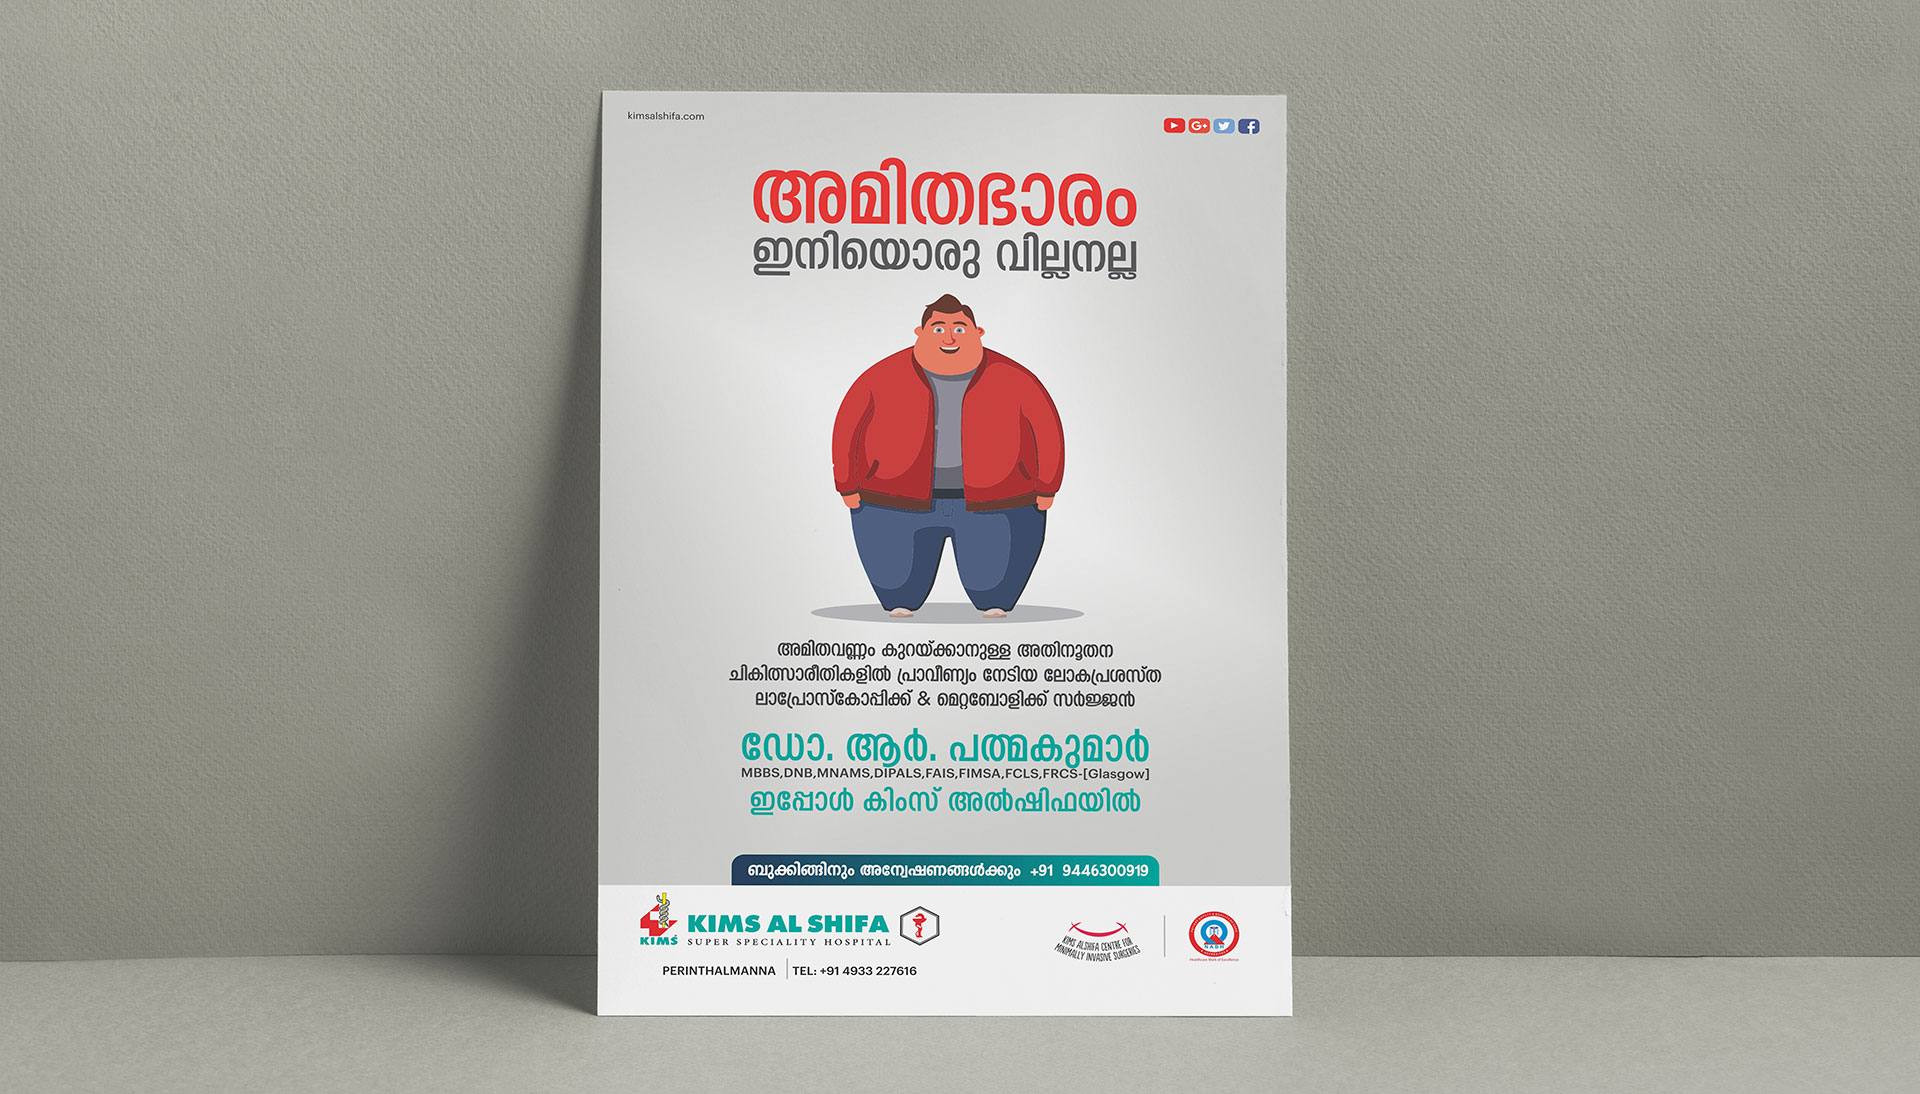 Ka poster of IMS Al Shifa Hospital - Obesity Campain